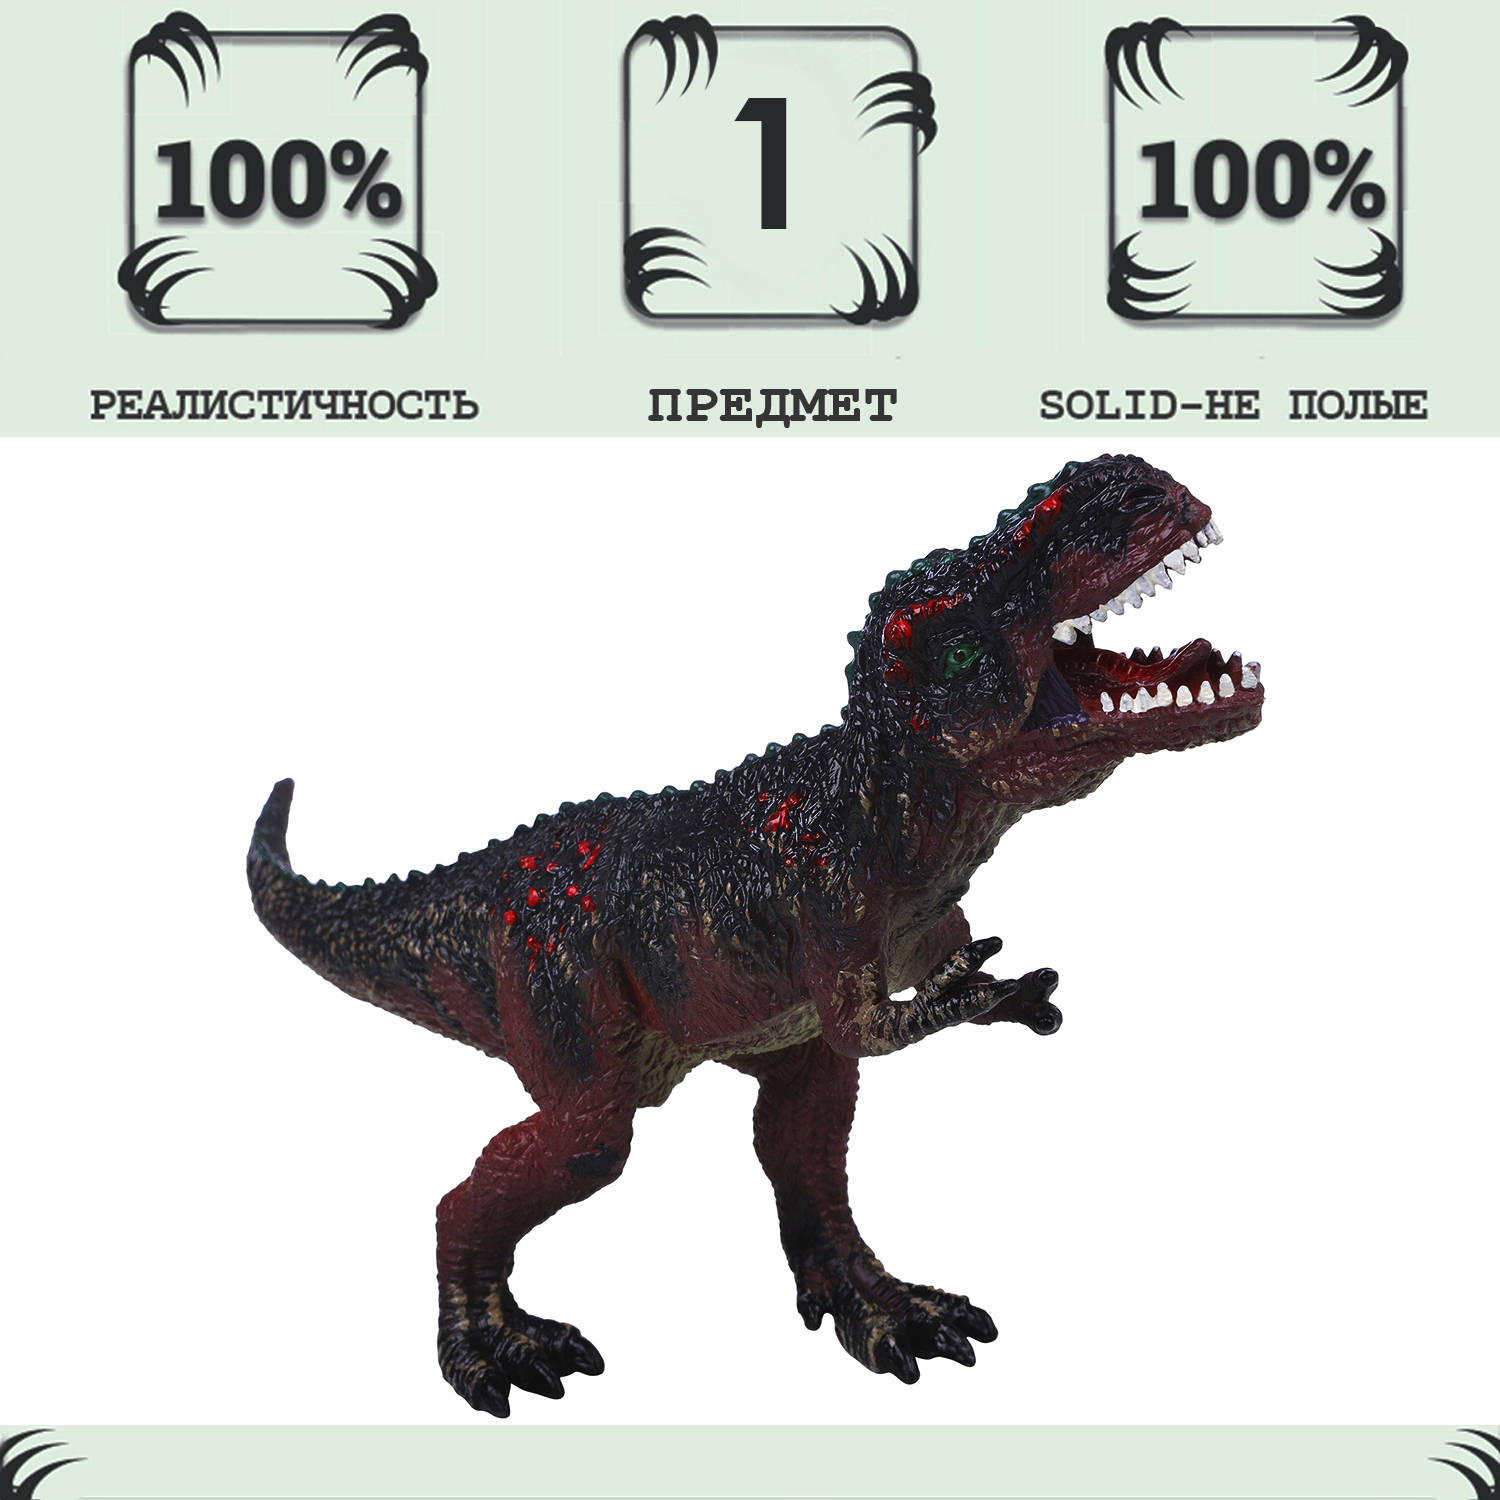 Фигурка Masai Mara динозавр серии Мир динозавров - Тираннозавр (Тирекс) MM216-061 игрушка динозавр серии мир динозавров masai mara трицератопс фигурка 30 см mm206 397